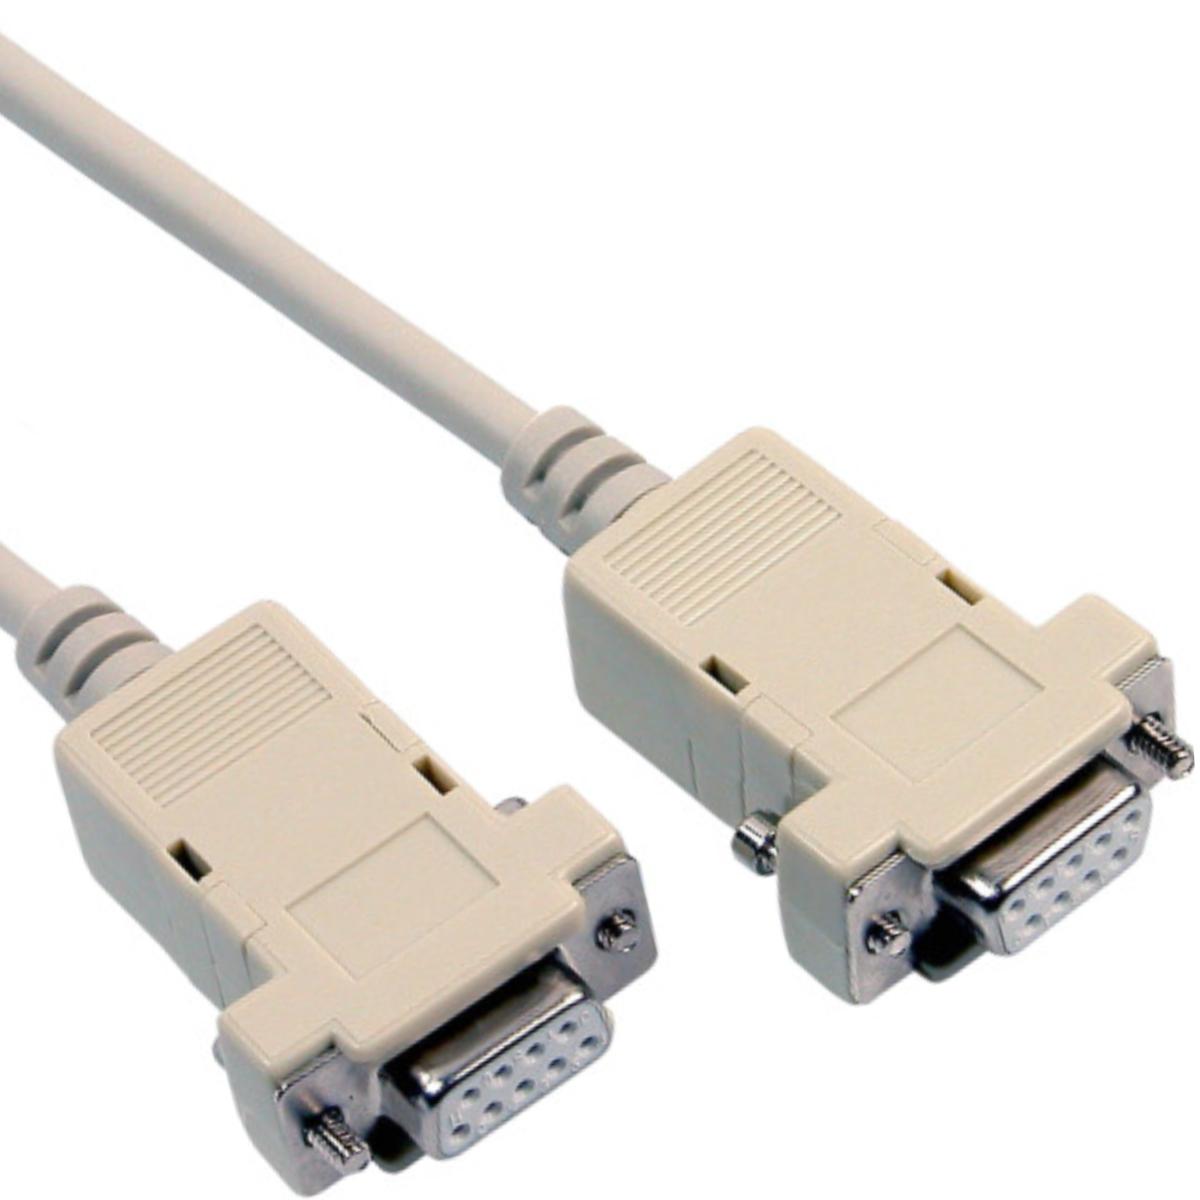 Null modem kabel - 2 meter - Techtube Pro